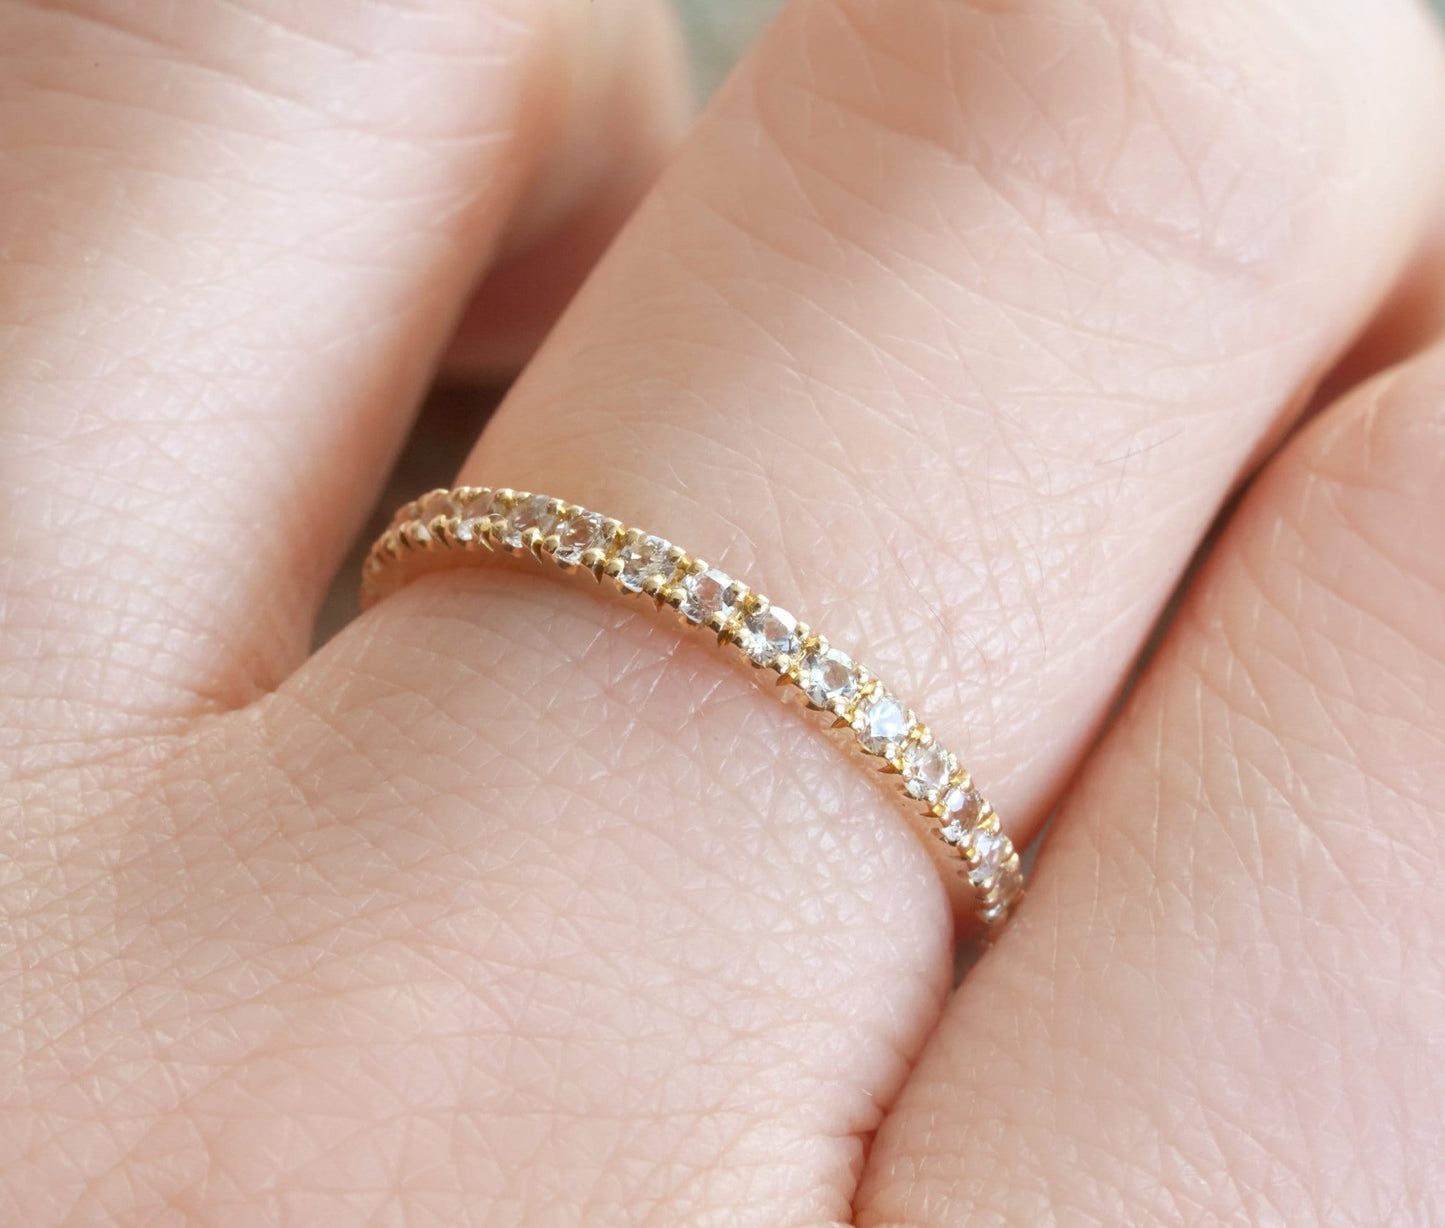 White Sapphire Eternity Ring, Colourless Sapphire Eternity Ring, Eternity Wedding Ring, Yellow Gold Eternity Ring, UK size J (US size 5)